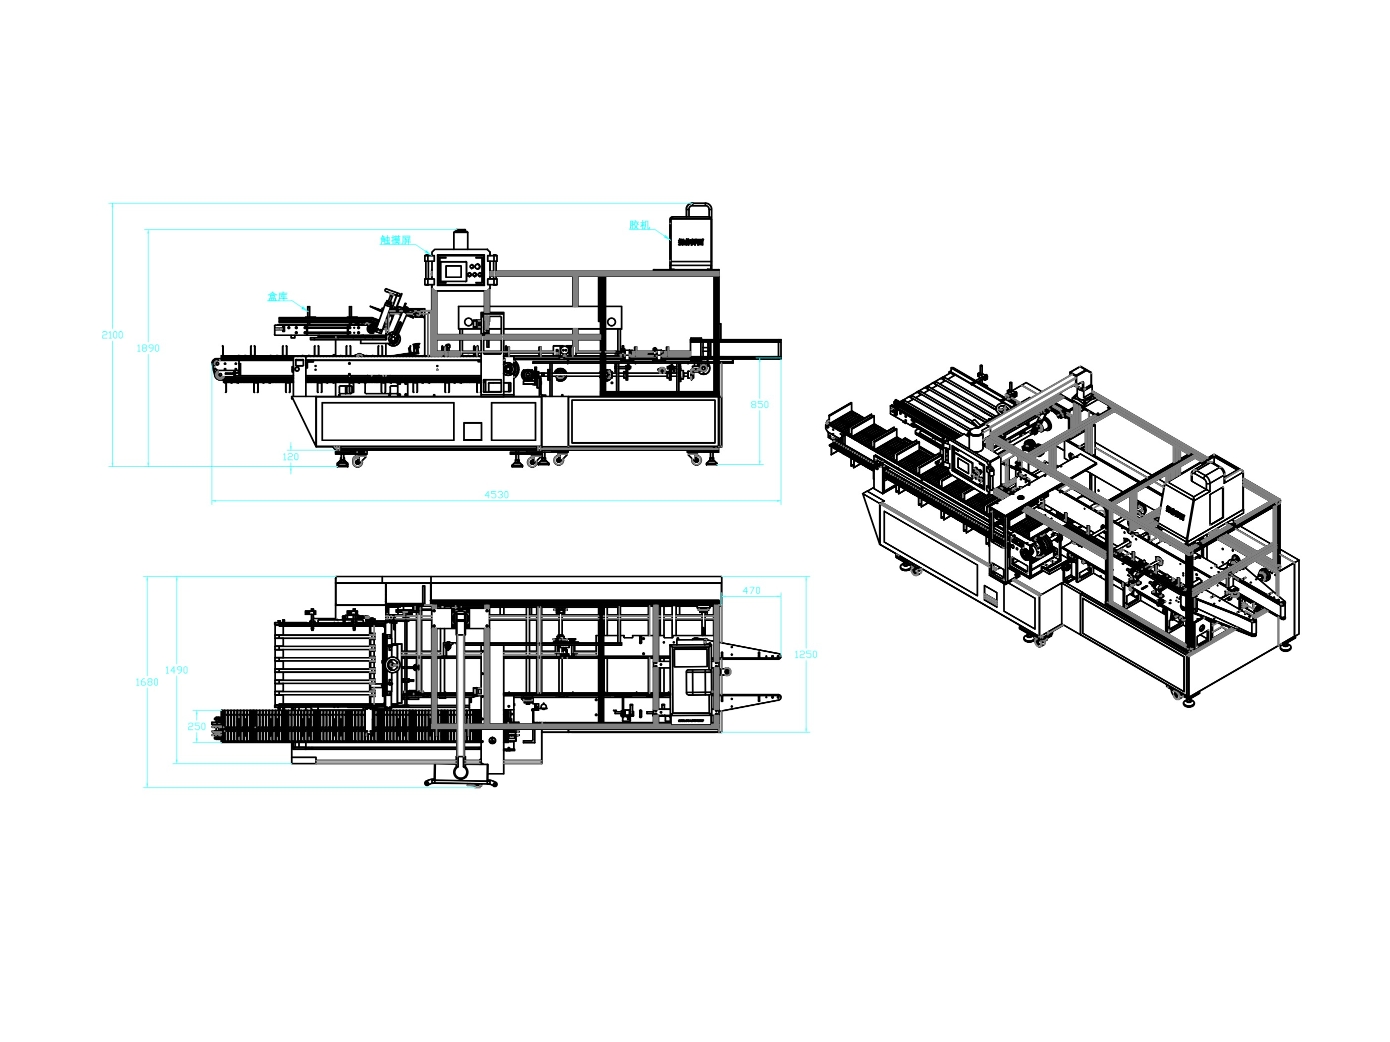 Drawings of the Side load Cartoner SBM-CMH-I60